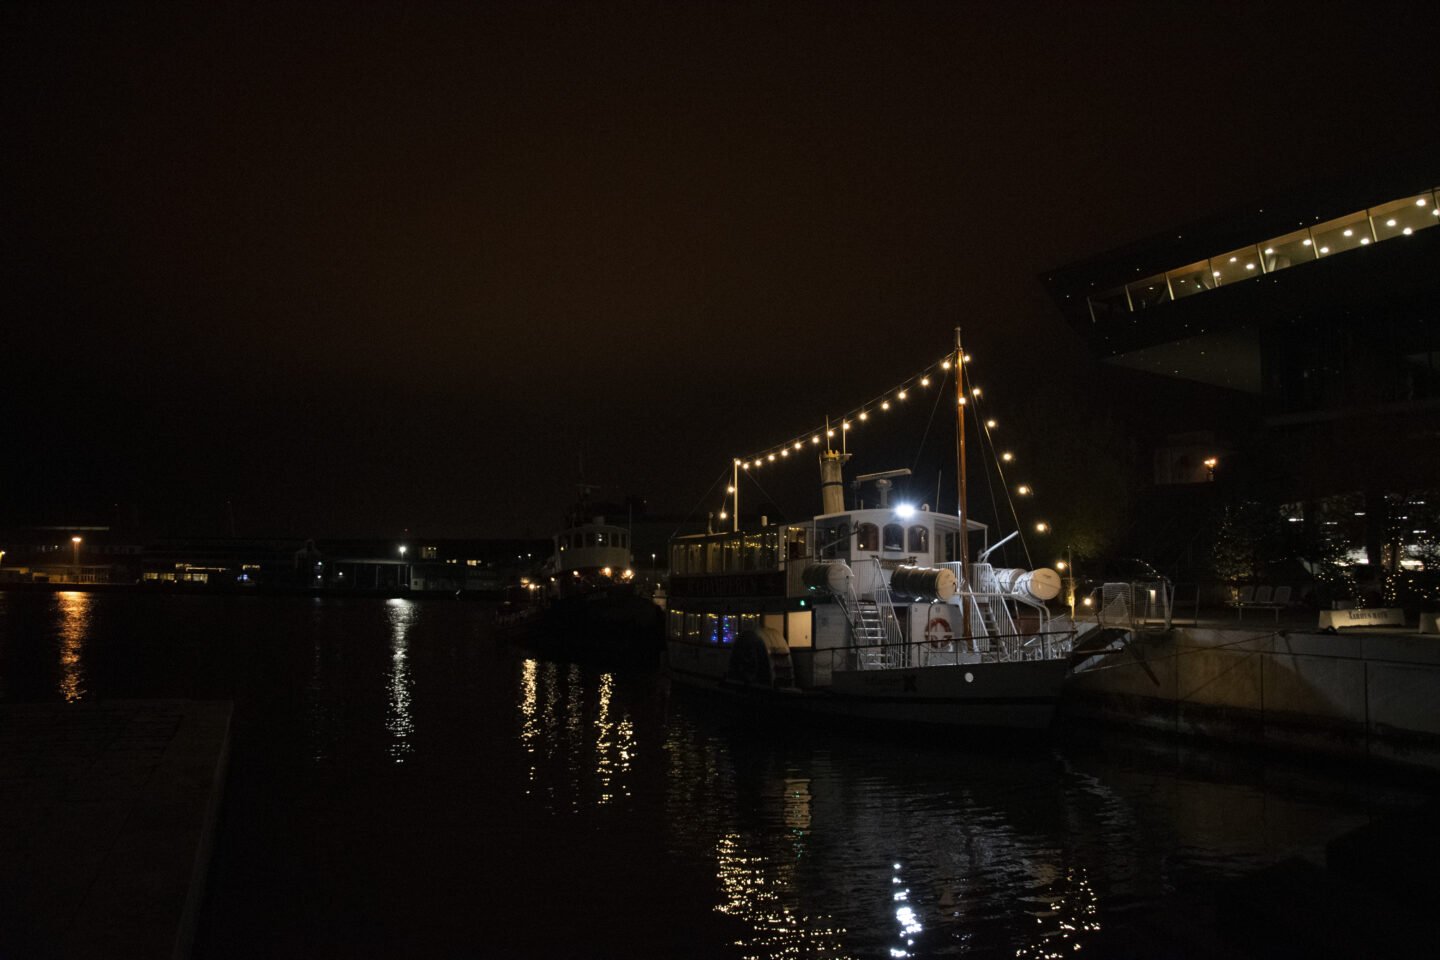 Juleskibet Svanen ved Dok Aarhus by night